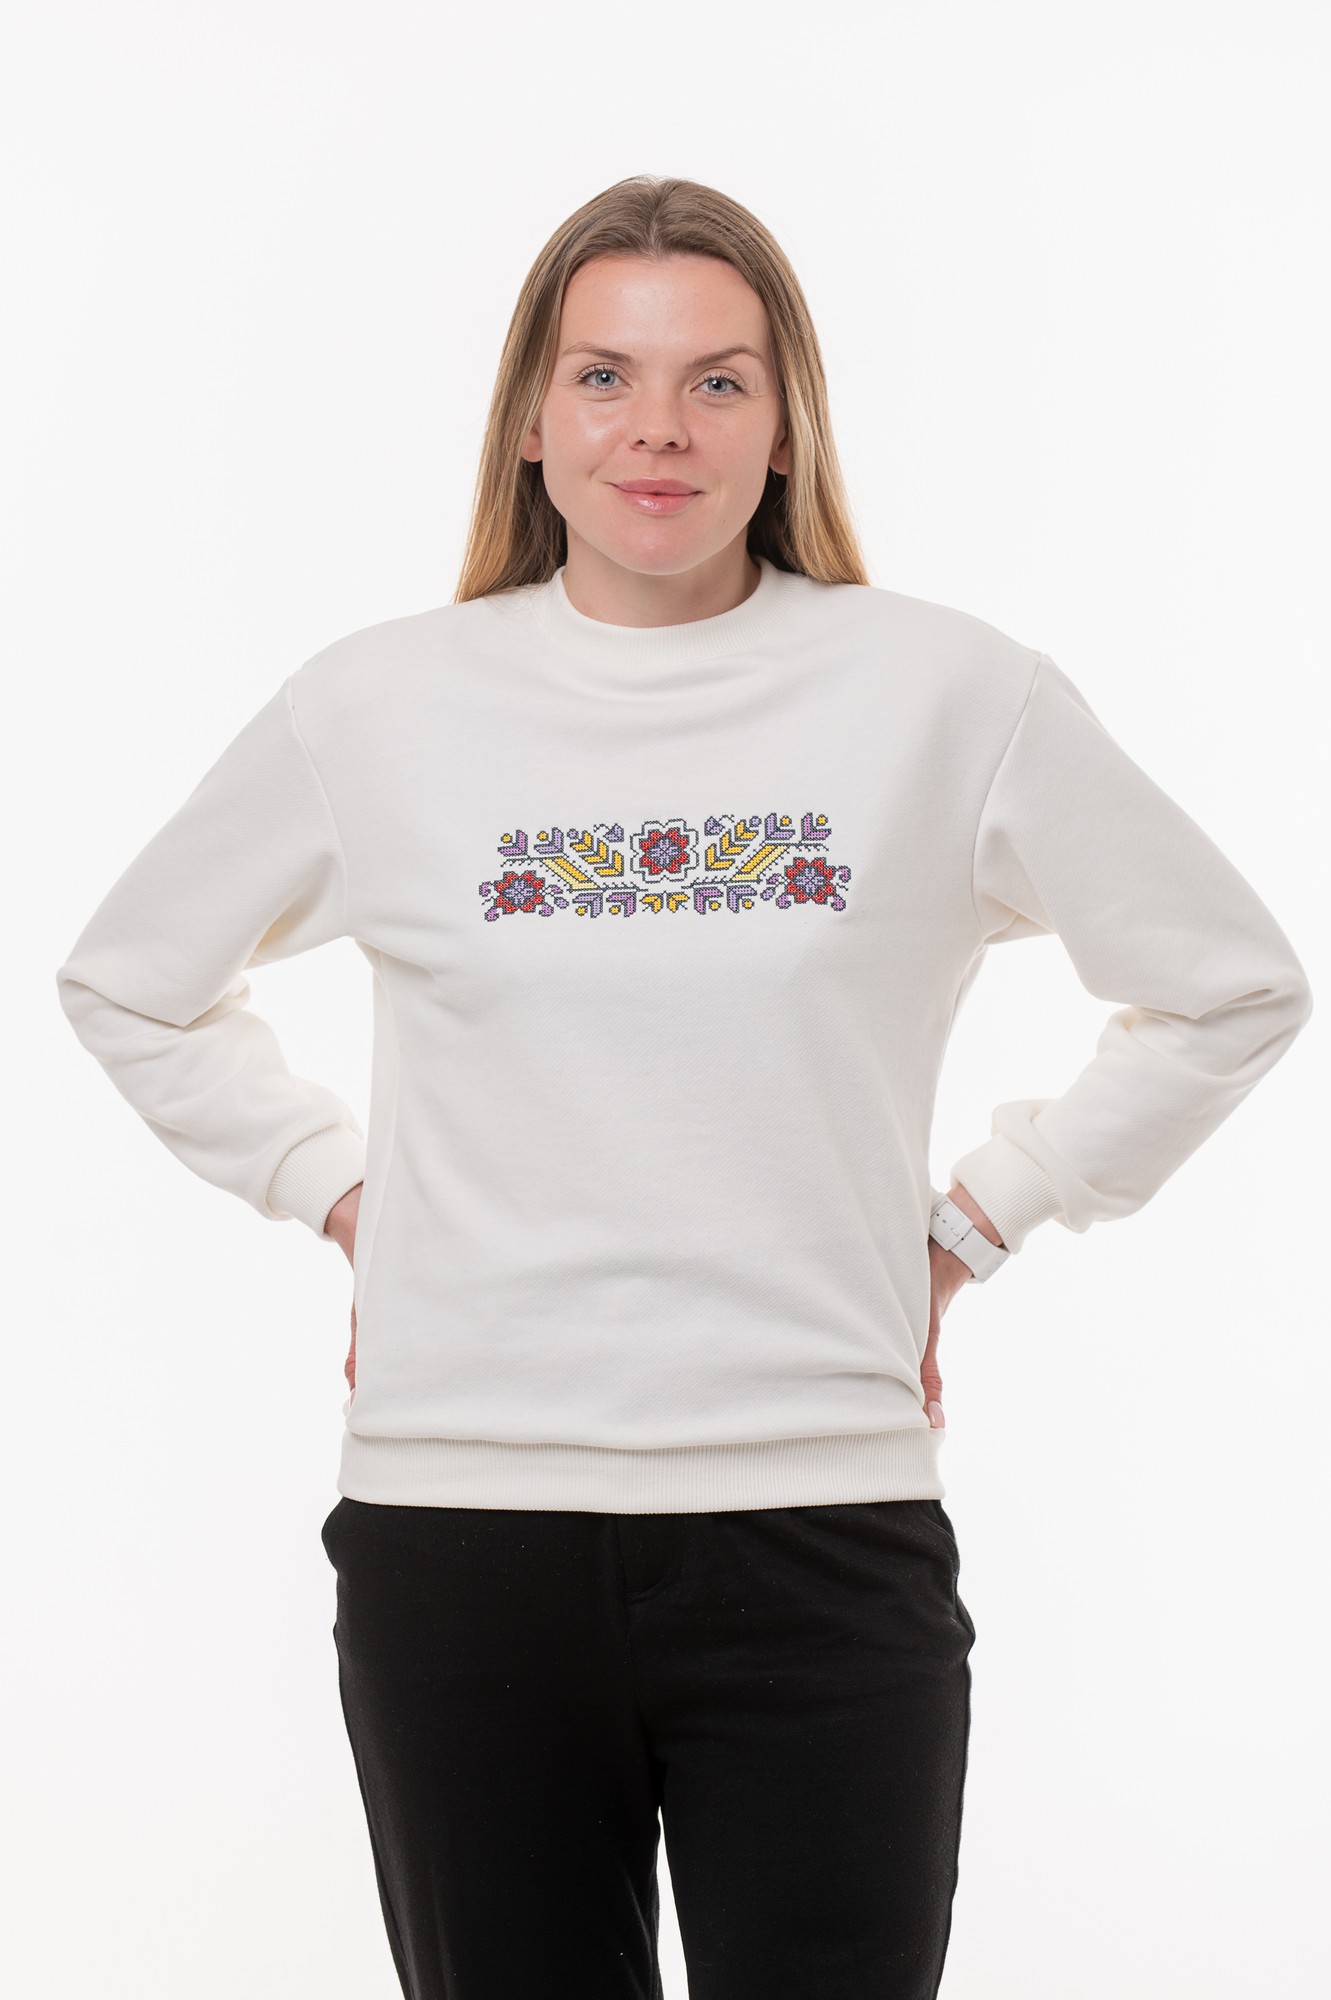 Women's sweatshirt with embroidery "Polyova" milky